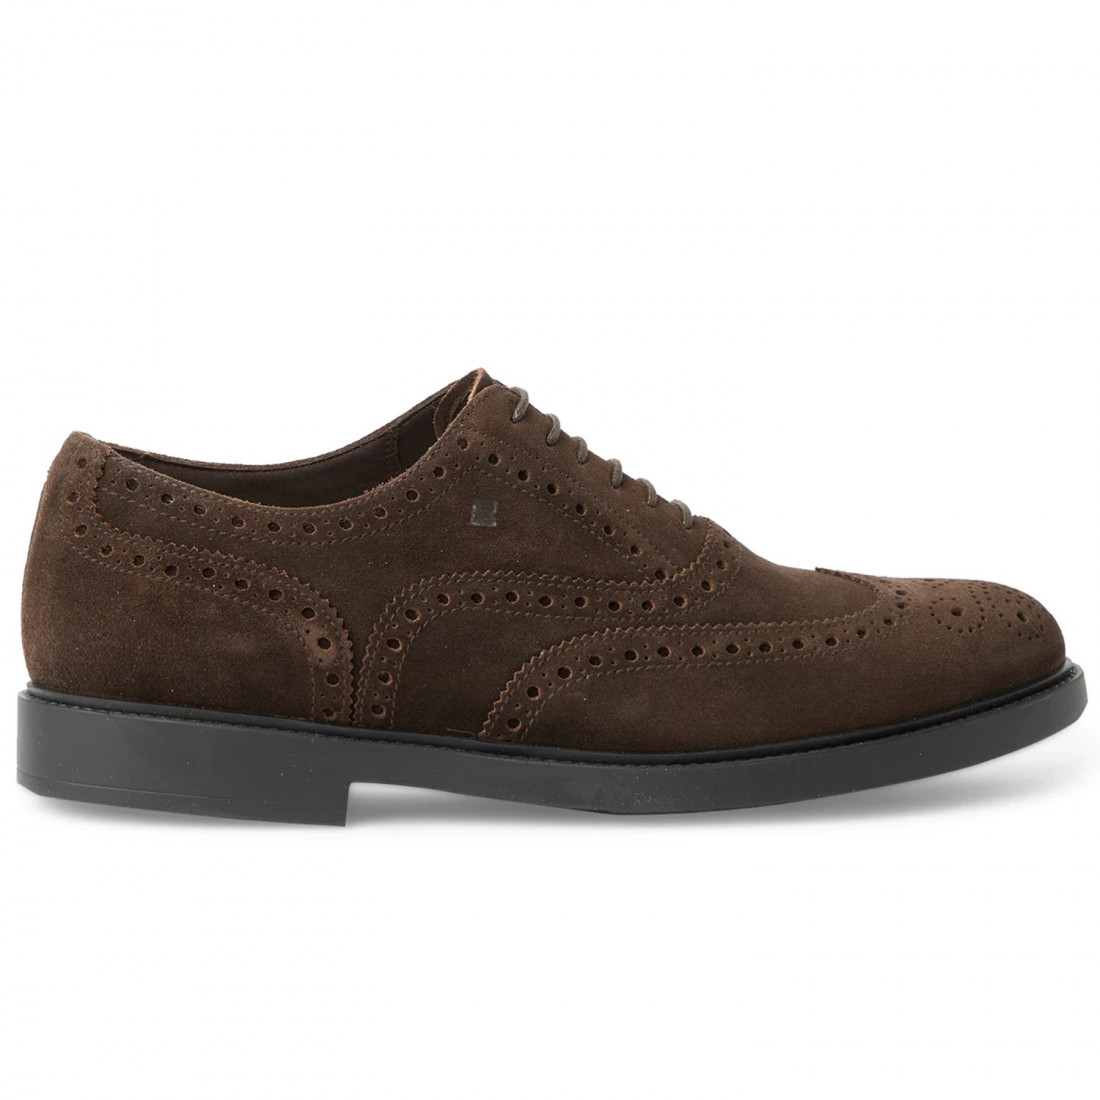 Fratelli Rossetti oxford brogue shoe in dark brown suede